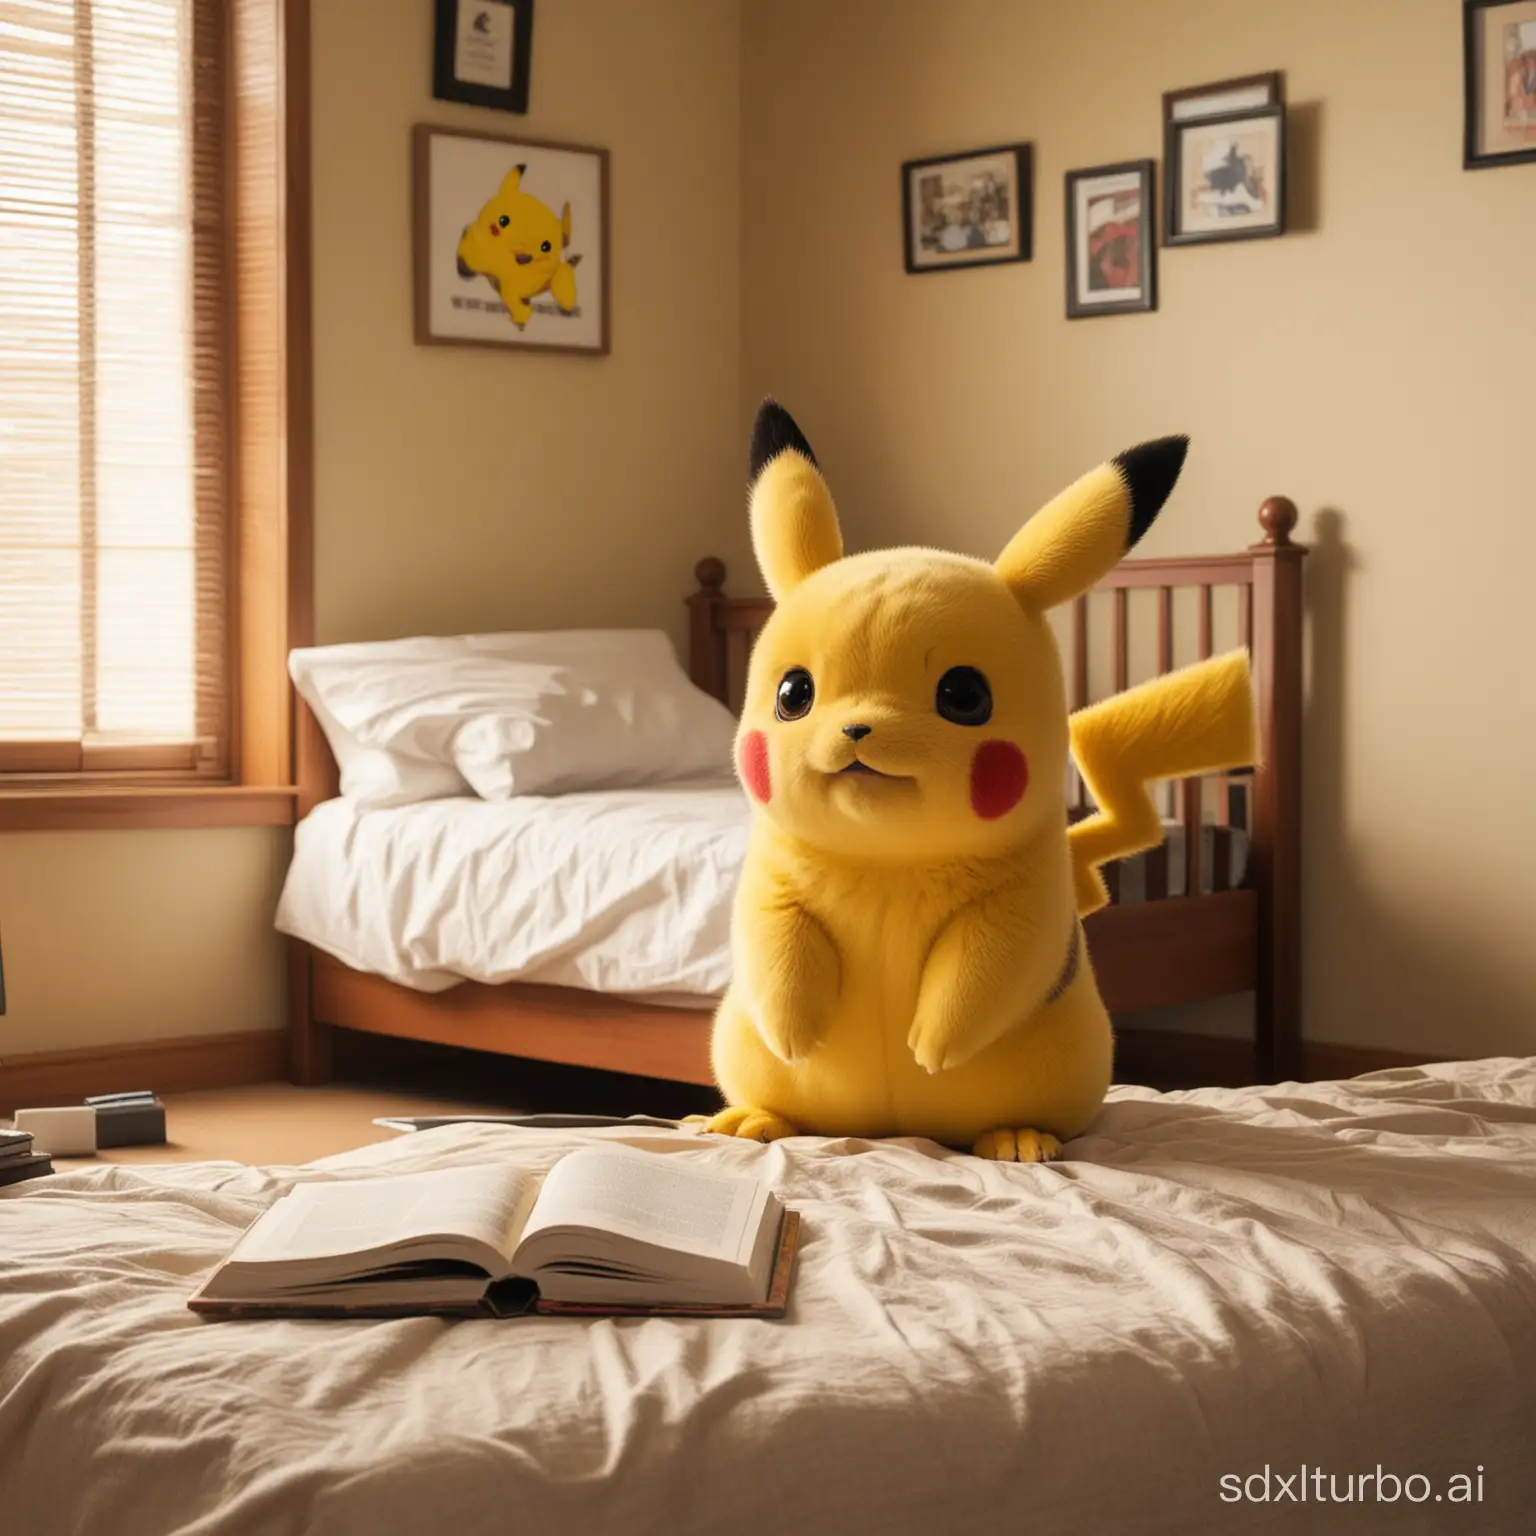 Pikachu studies hard in his nice and warm bedroom.